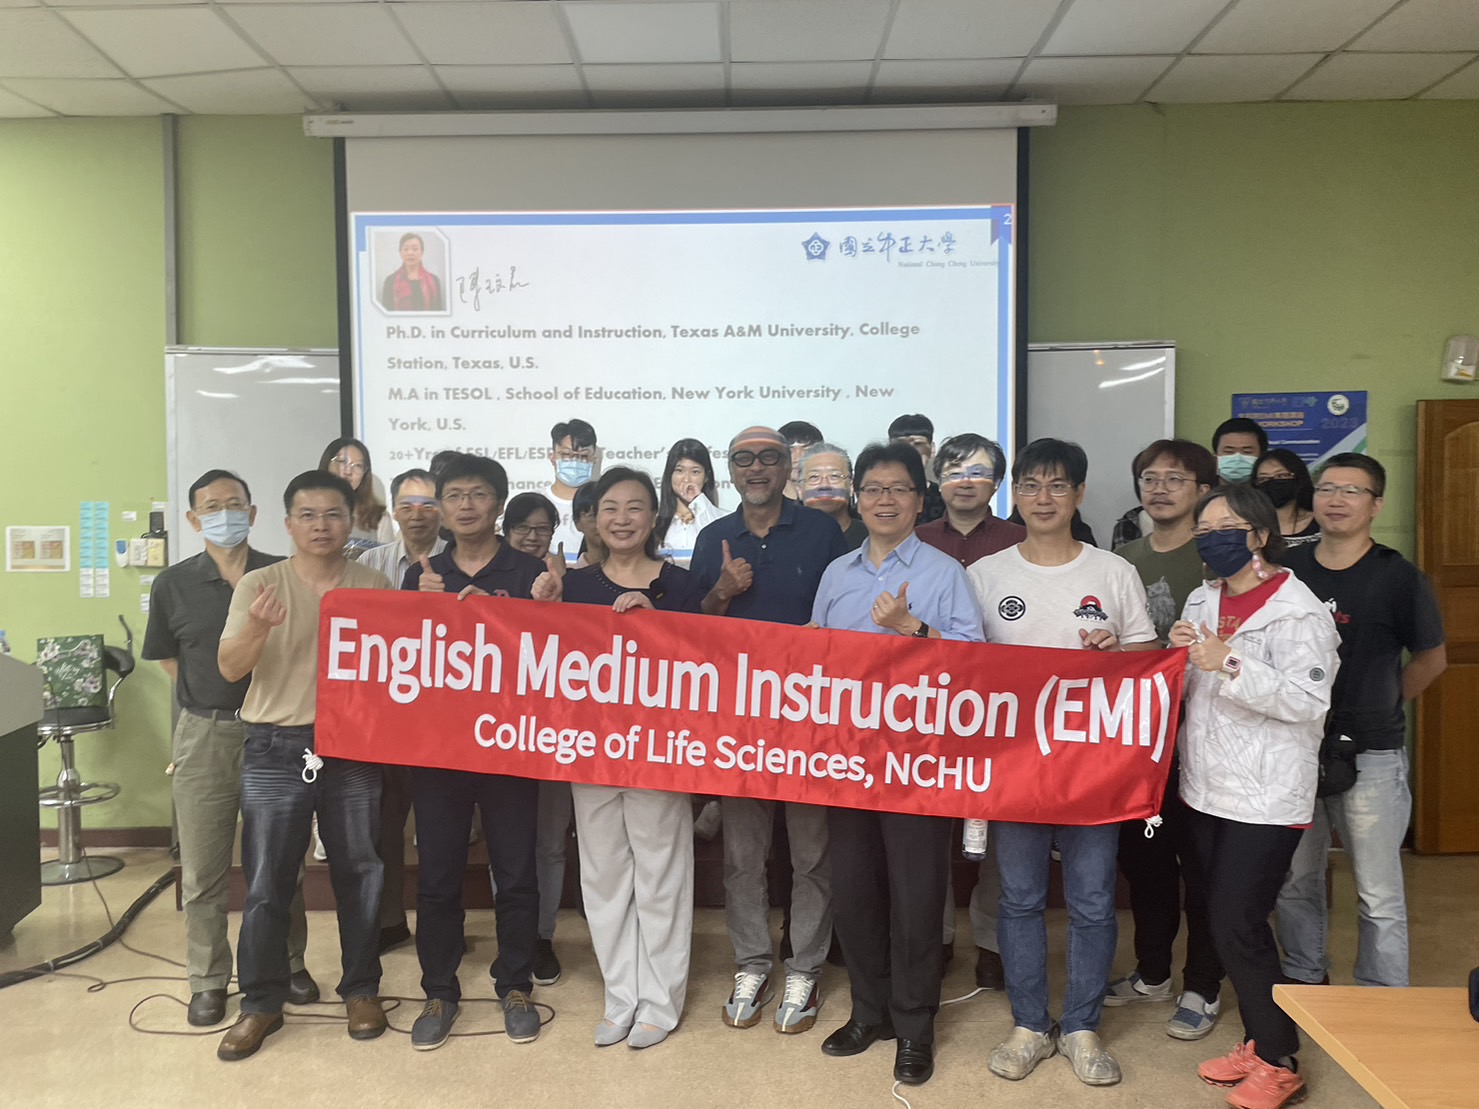 EMI WORKSHOP : Verbal and Visual Communication for EMI ClassroomGina - Wen-Chun Chen, Ph.D.